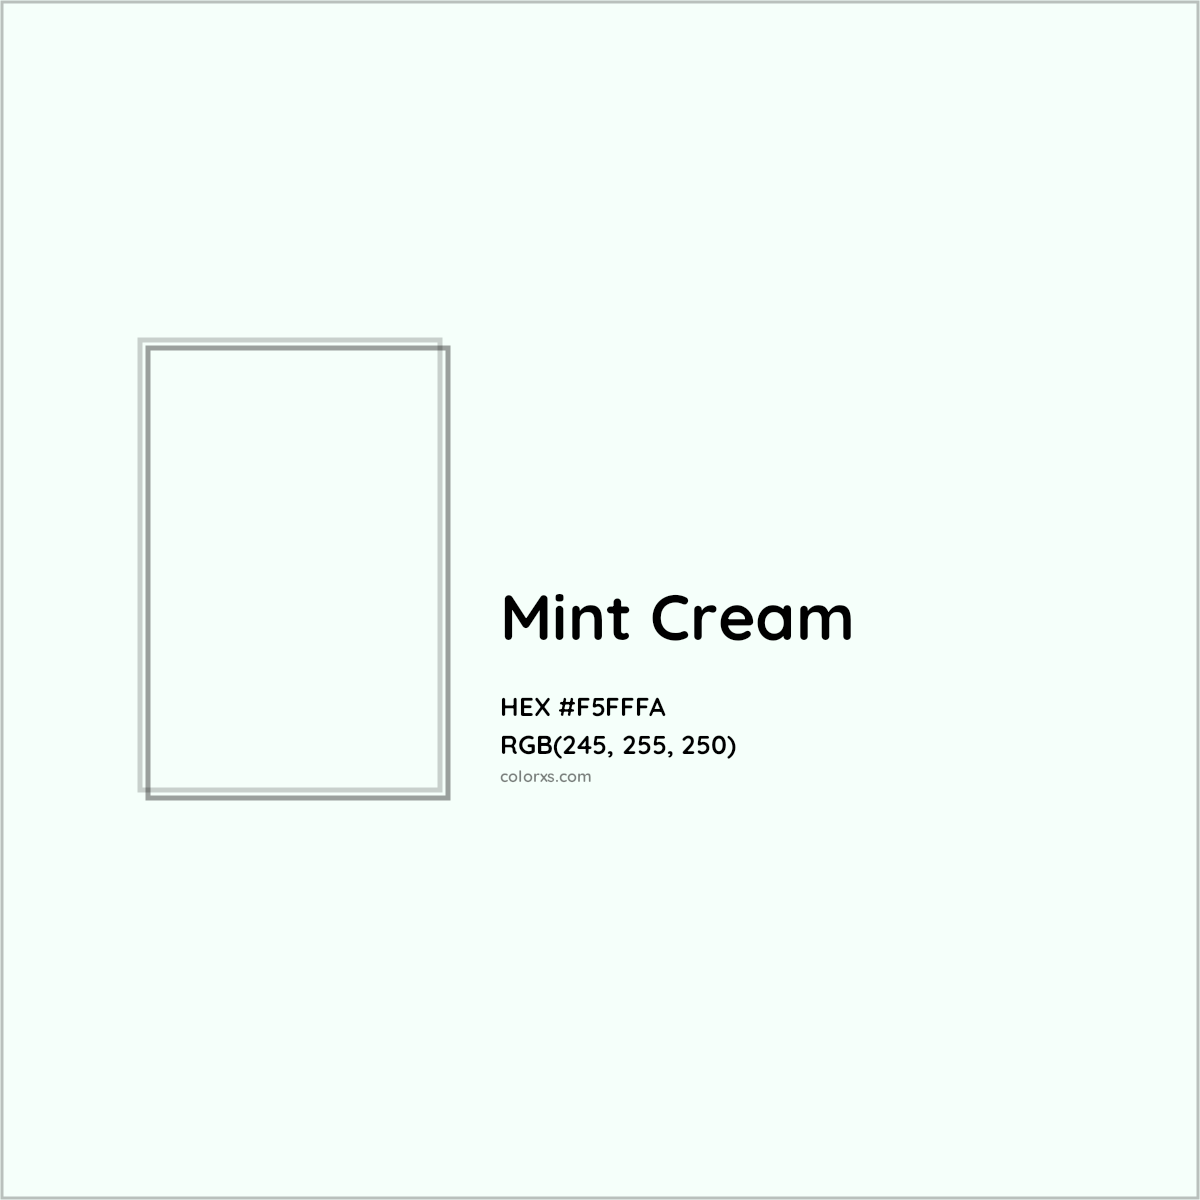 HEX #F5FFFA Mint Cream Color - Color Code